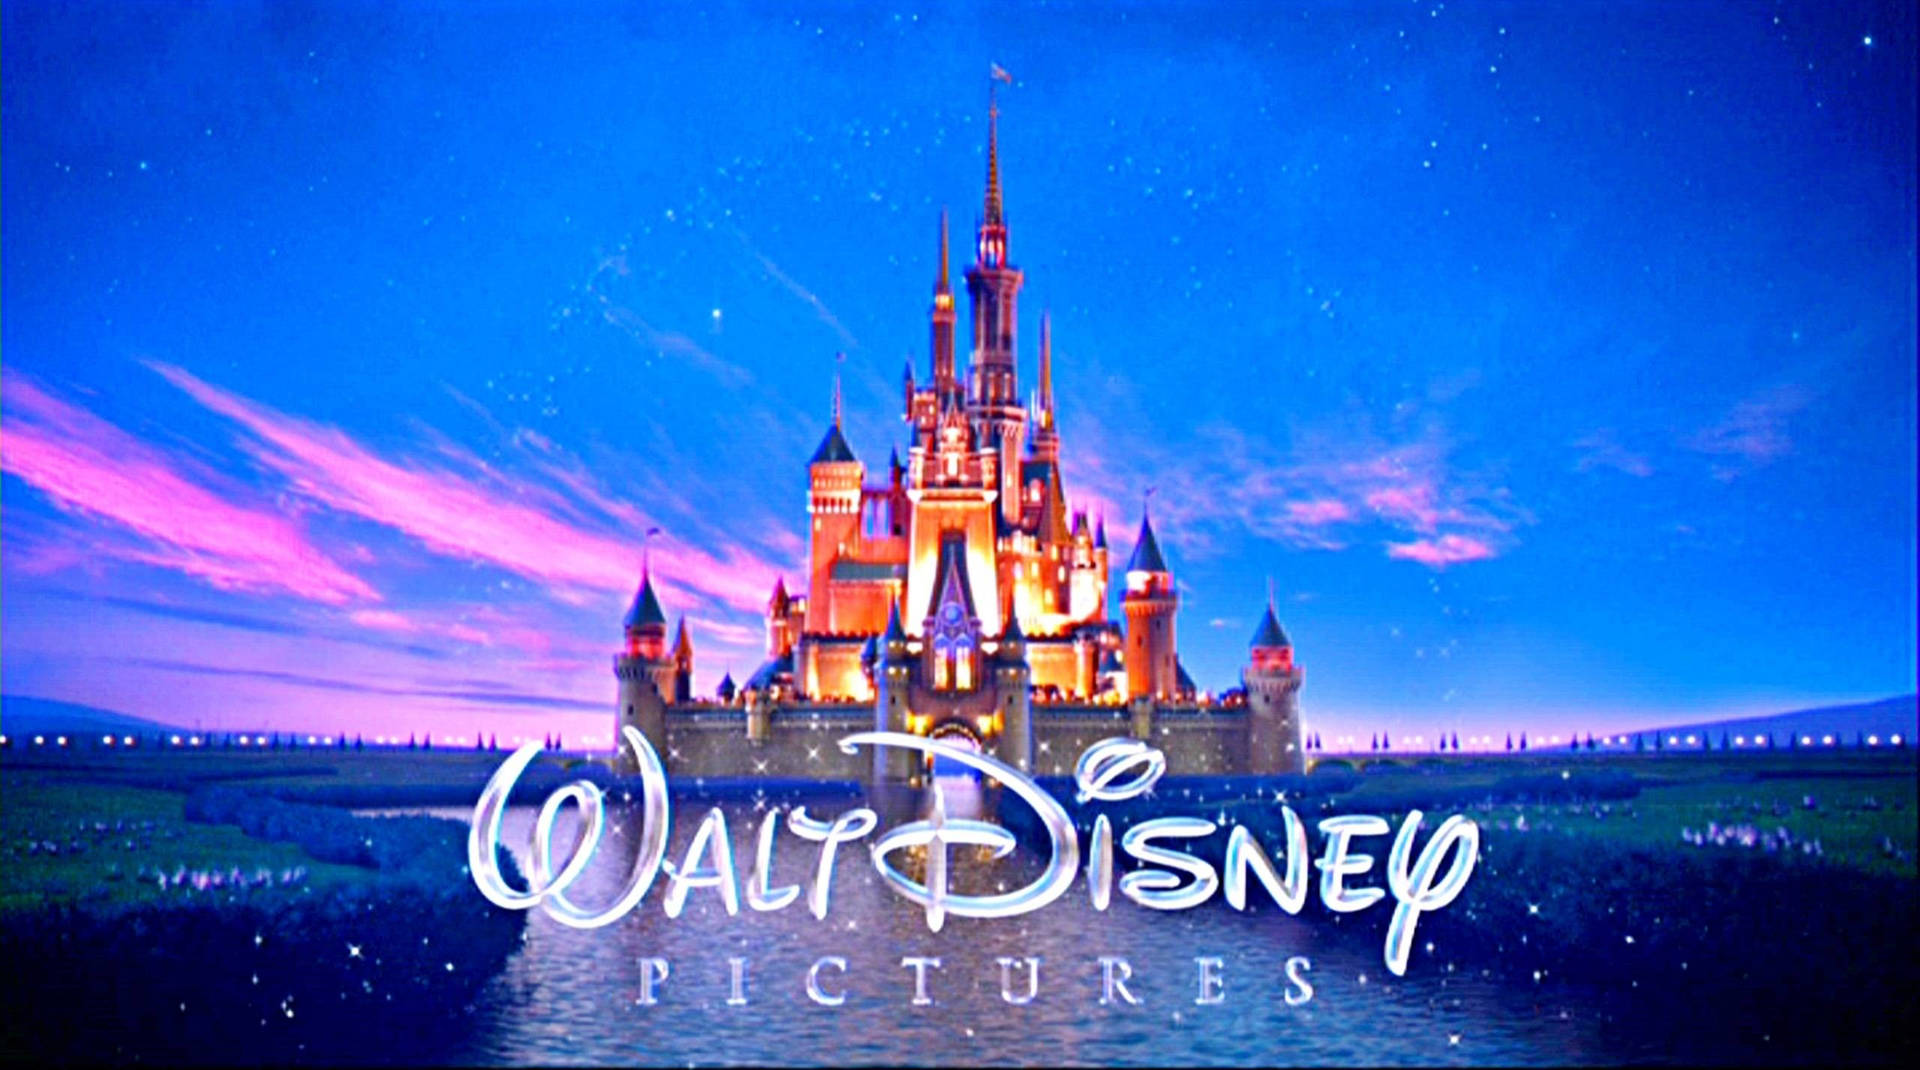 Disney Castle Walt Disney Picture Wallpaper